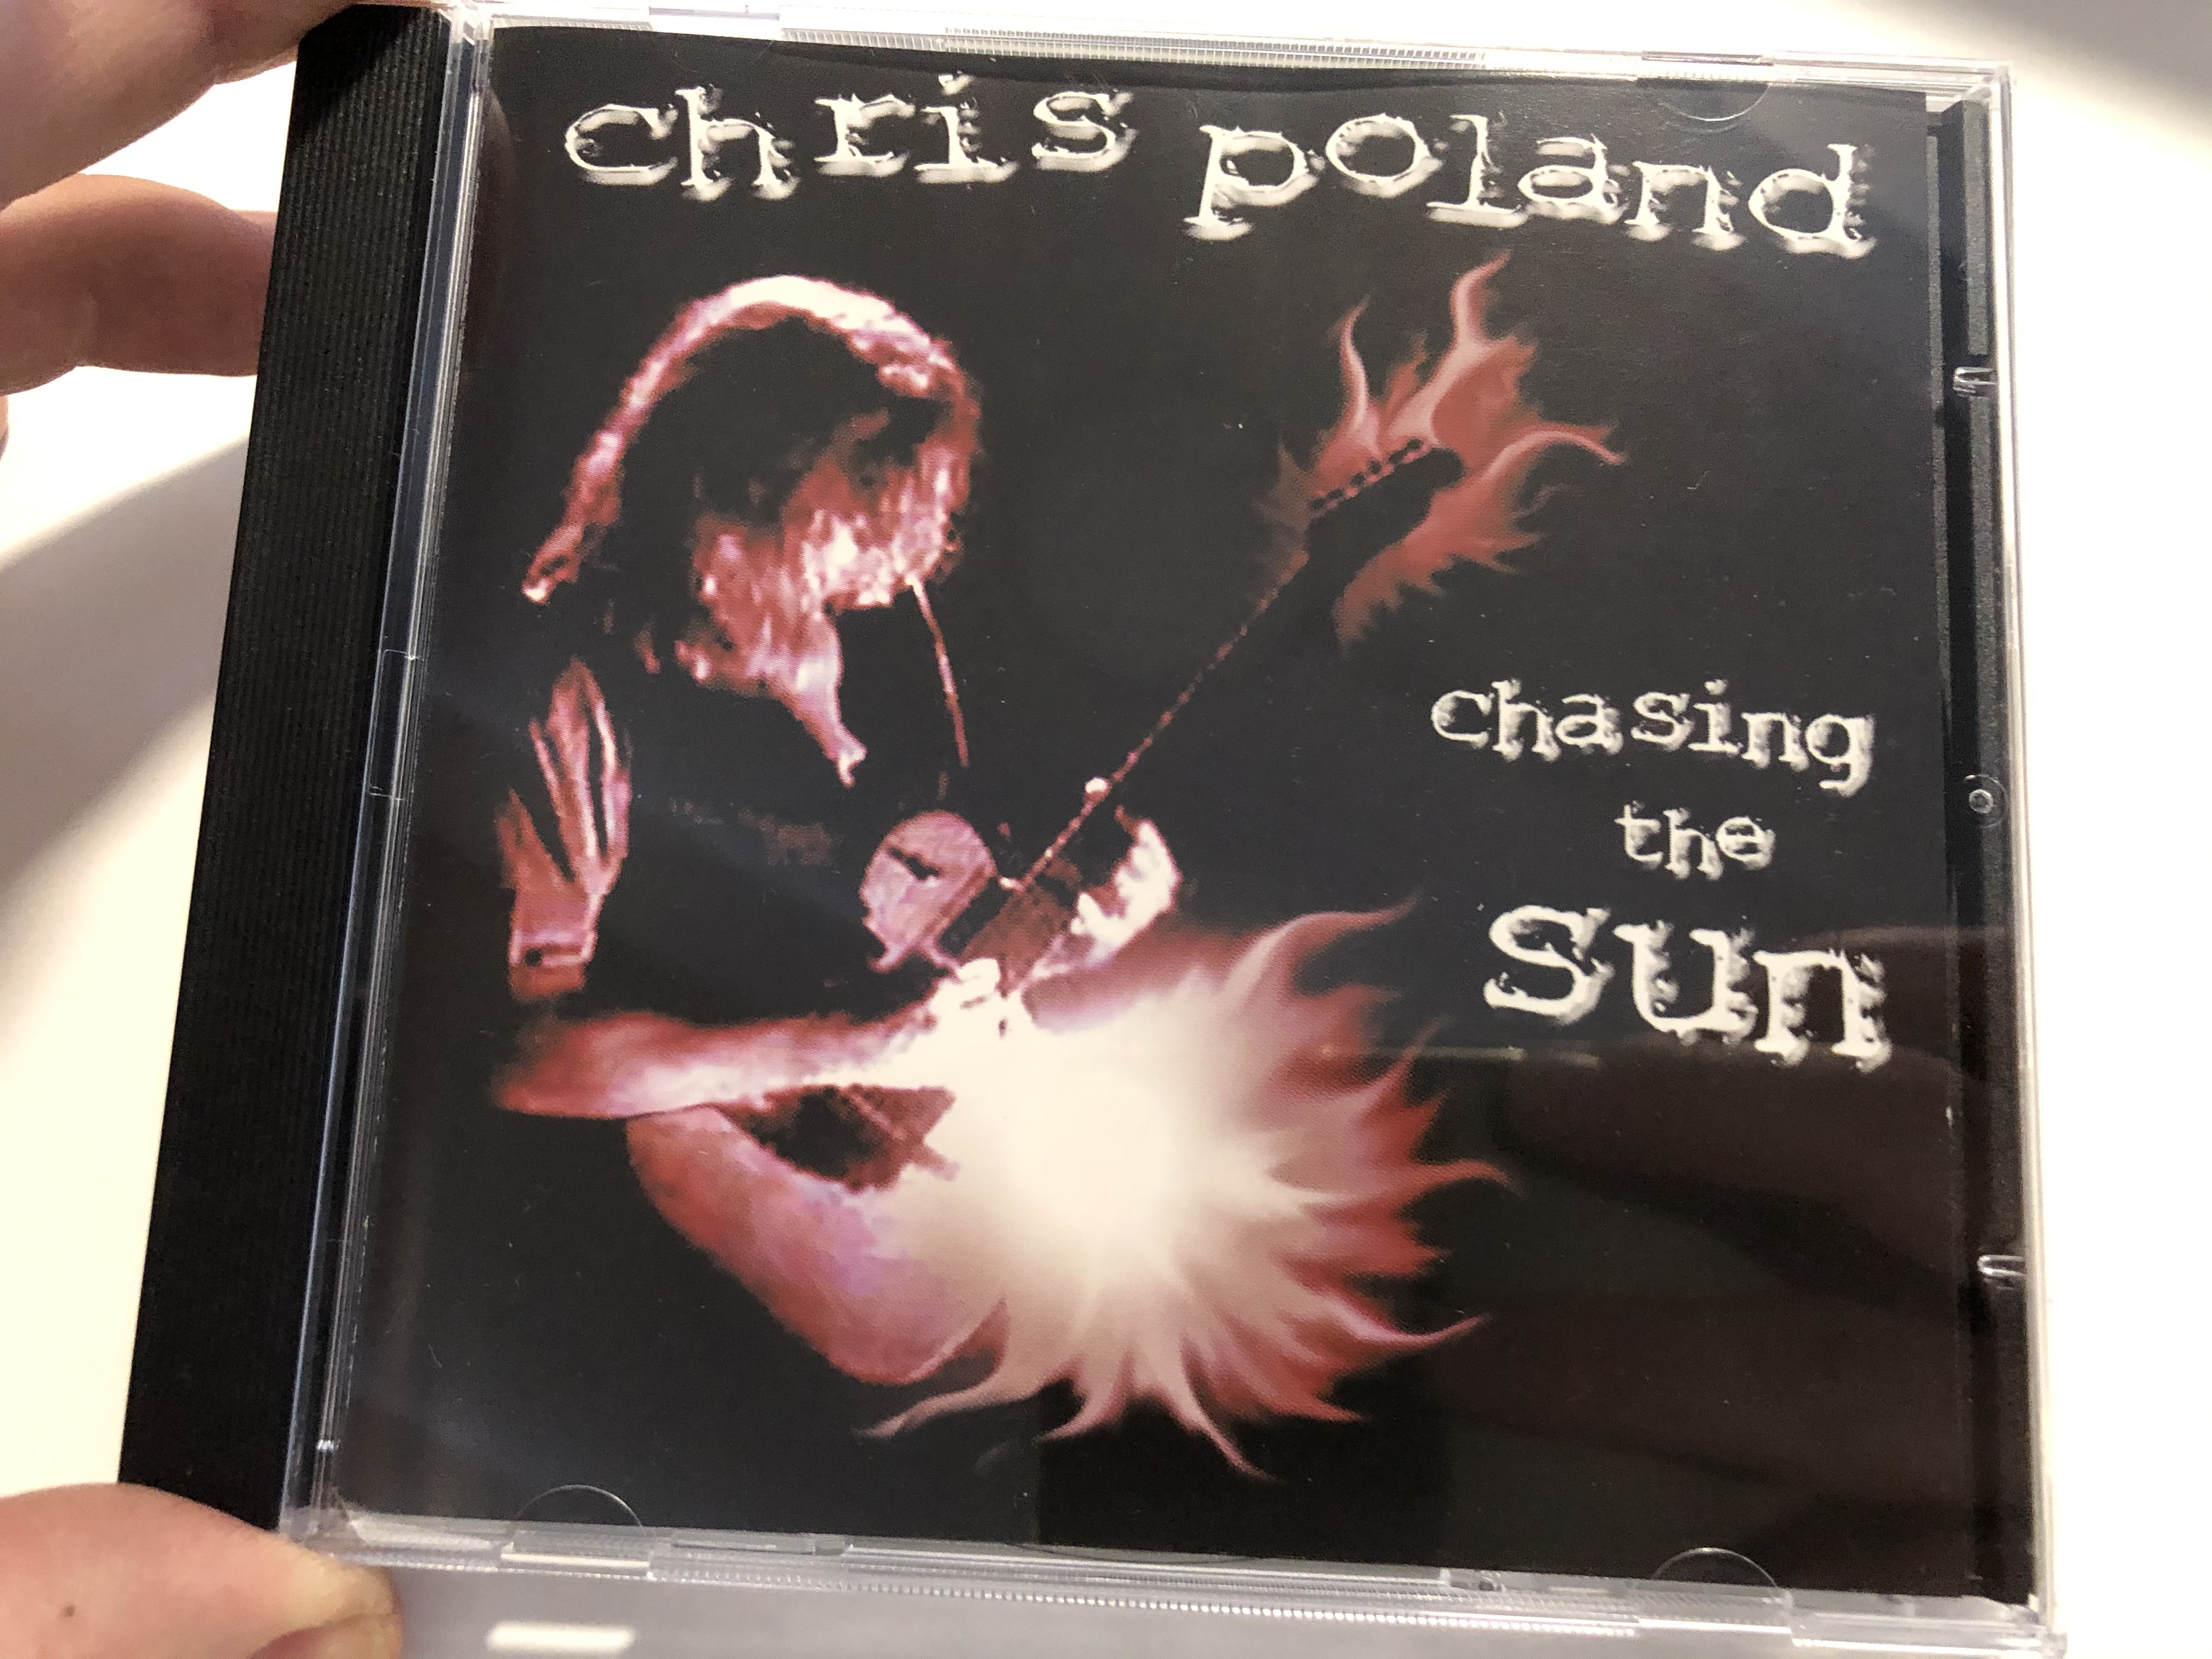 chris-poland-chasing-the-sun-mascot-records-audio-cd-2001-m-7060-2-1-.jpg